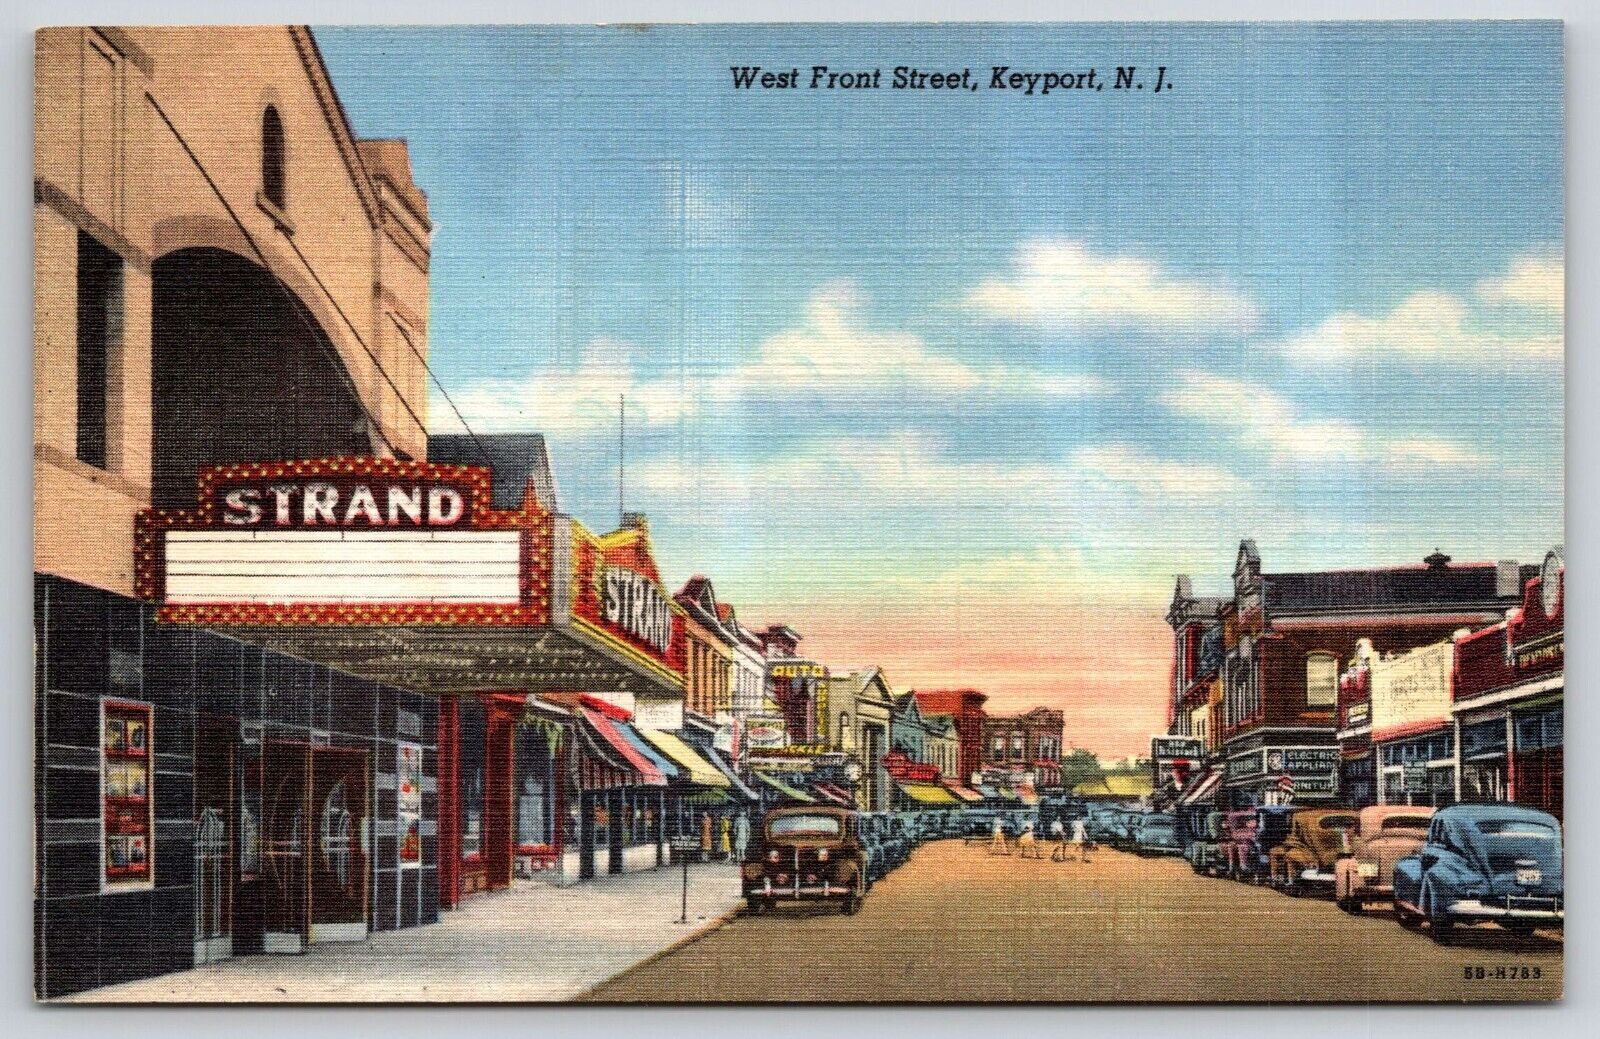 Keyport NJ New Jersey West Front Street City View Vintage Postcard